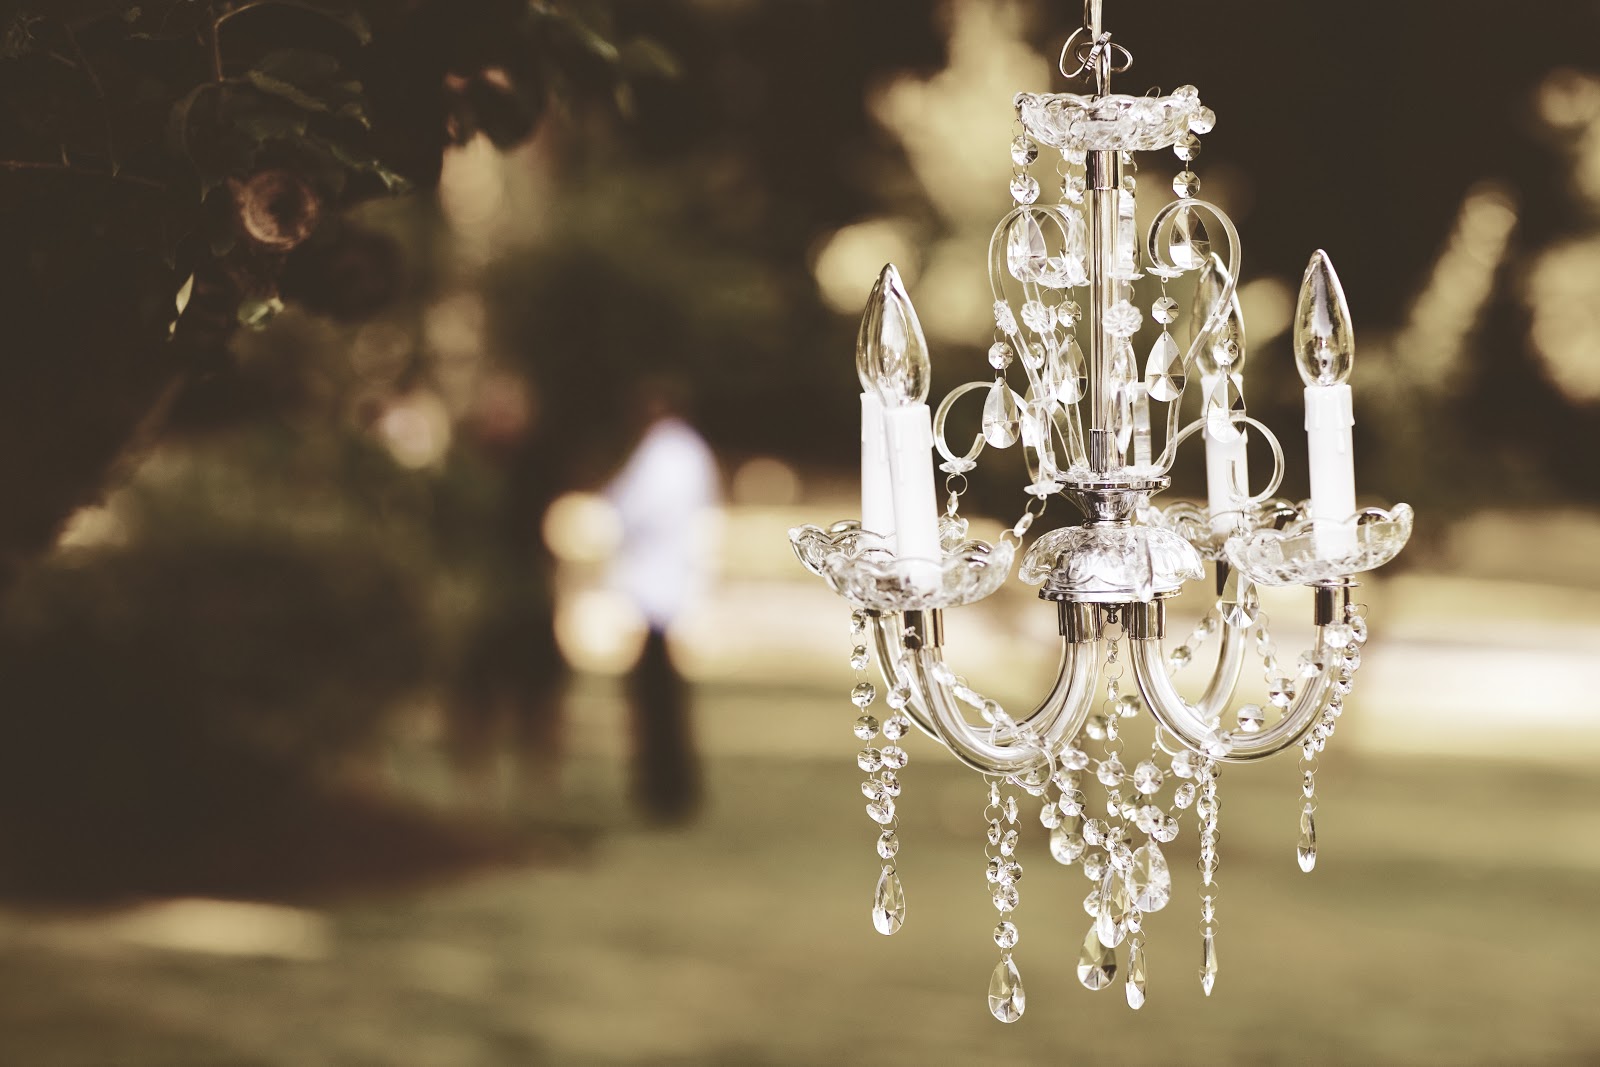 Little Luxuries nice chandelier